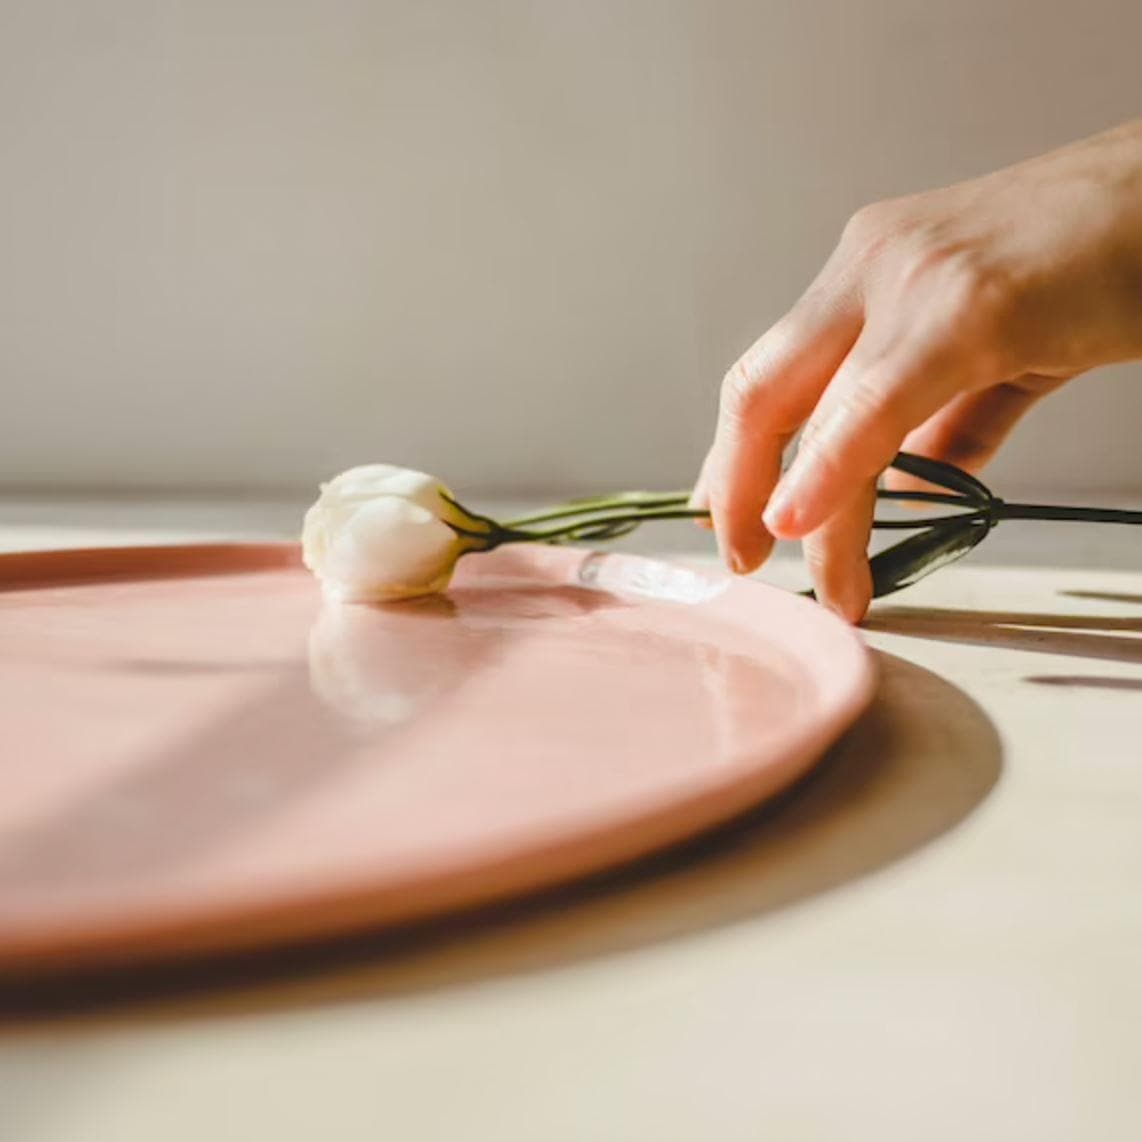 Handmade Porcelain Pink Blush Dinner Plate - MAIA HOMES